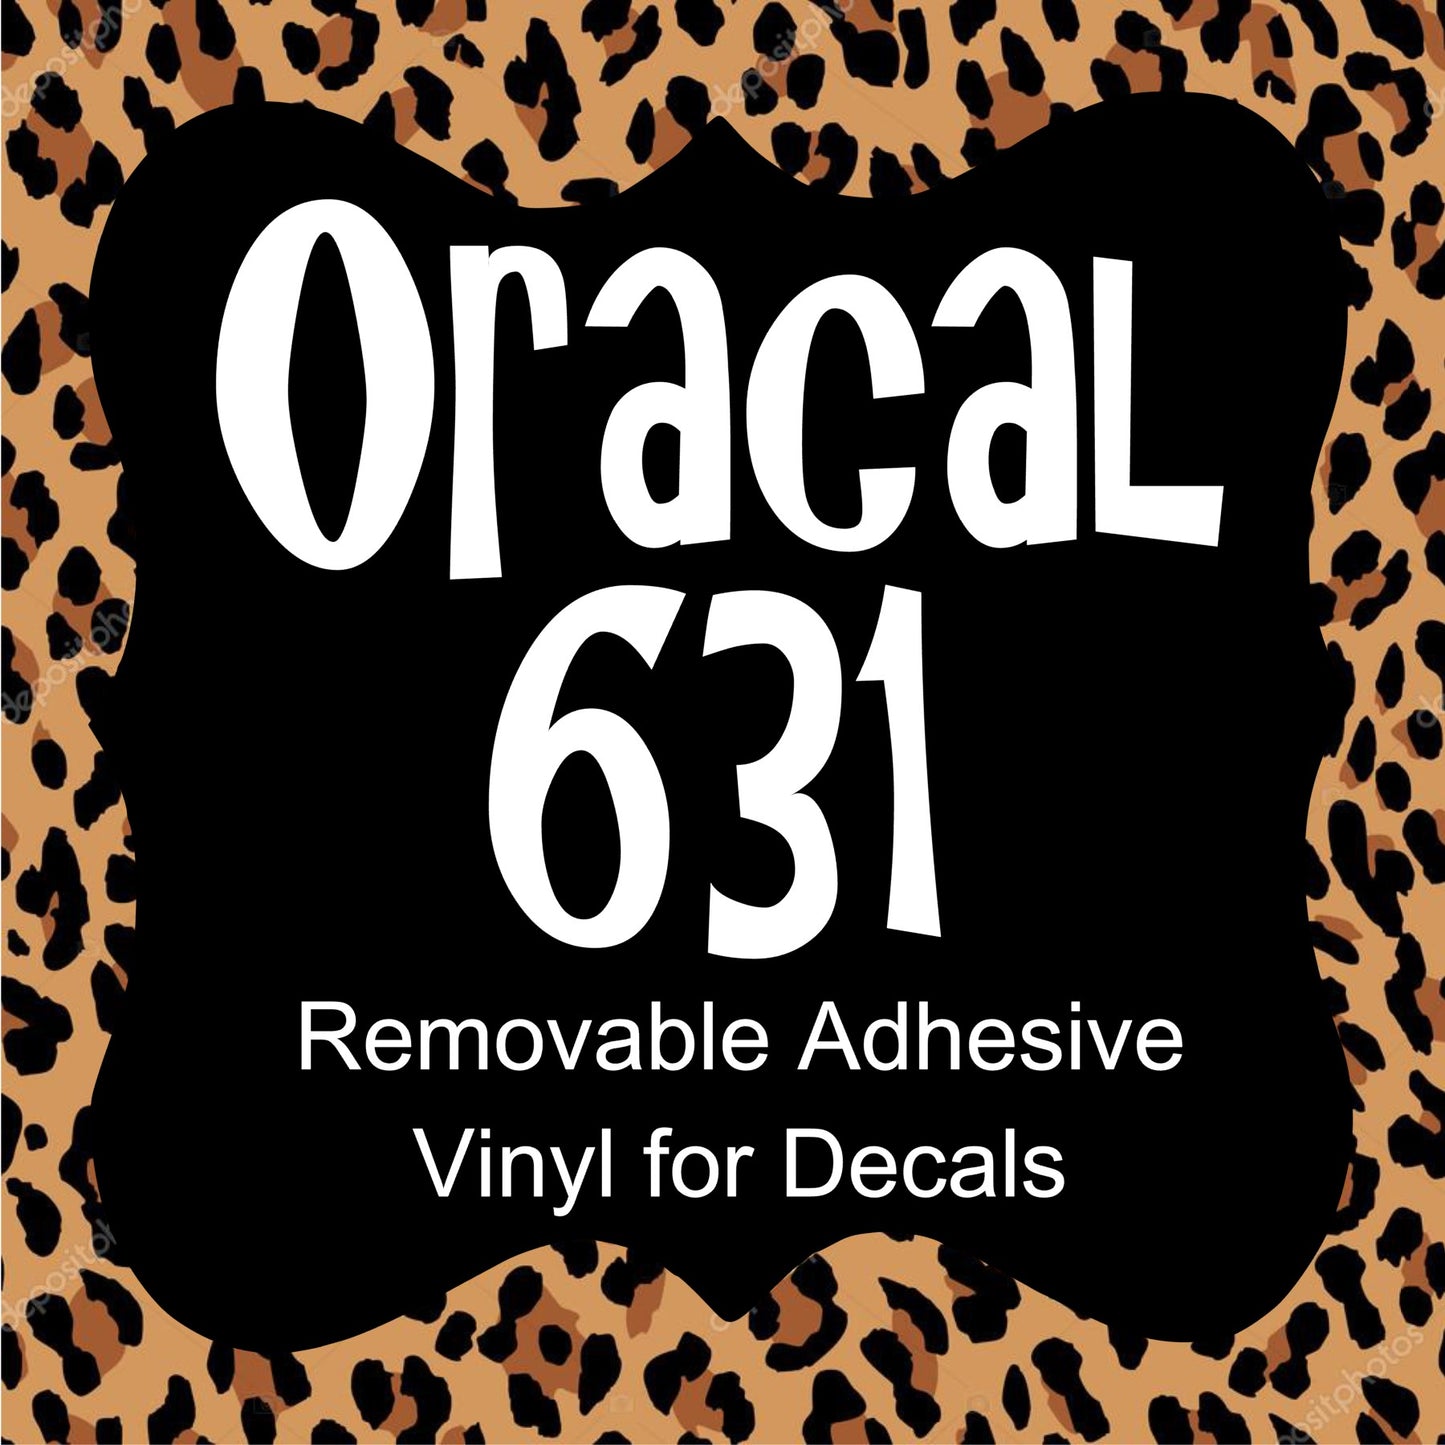 Oracal 631 - Sheets